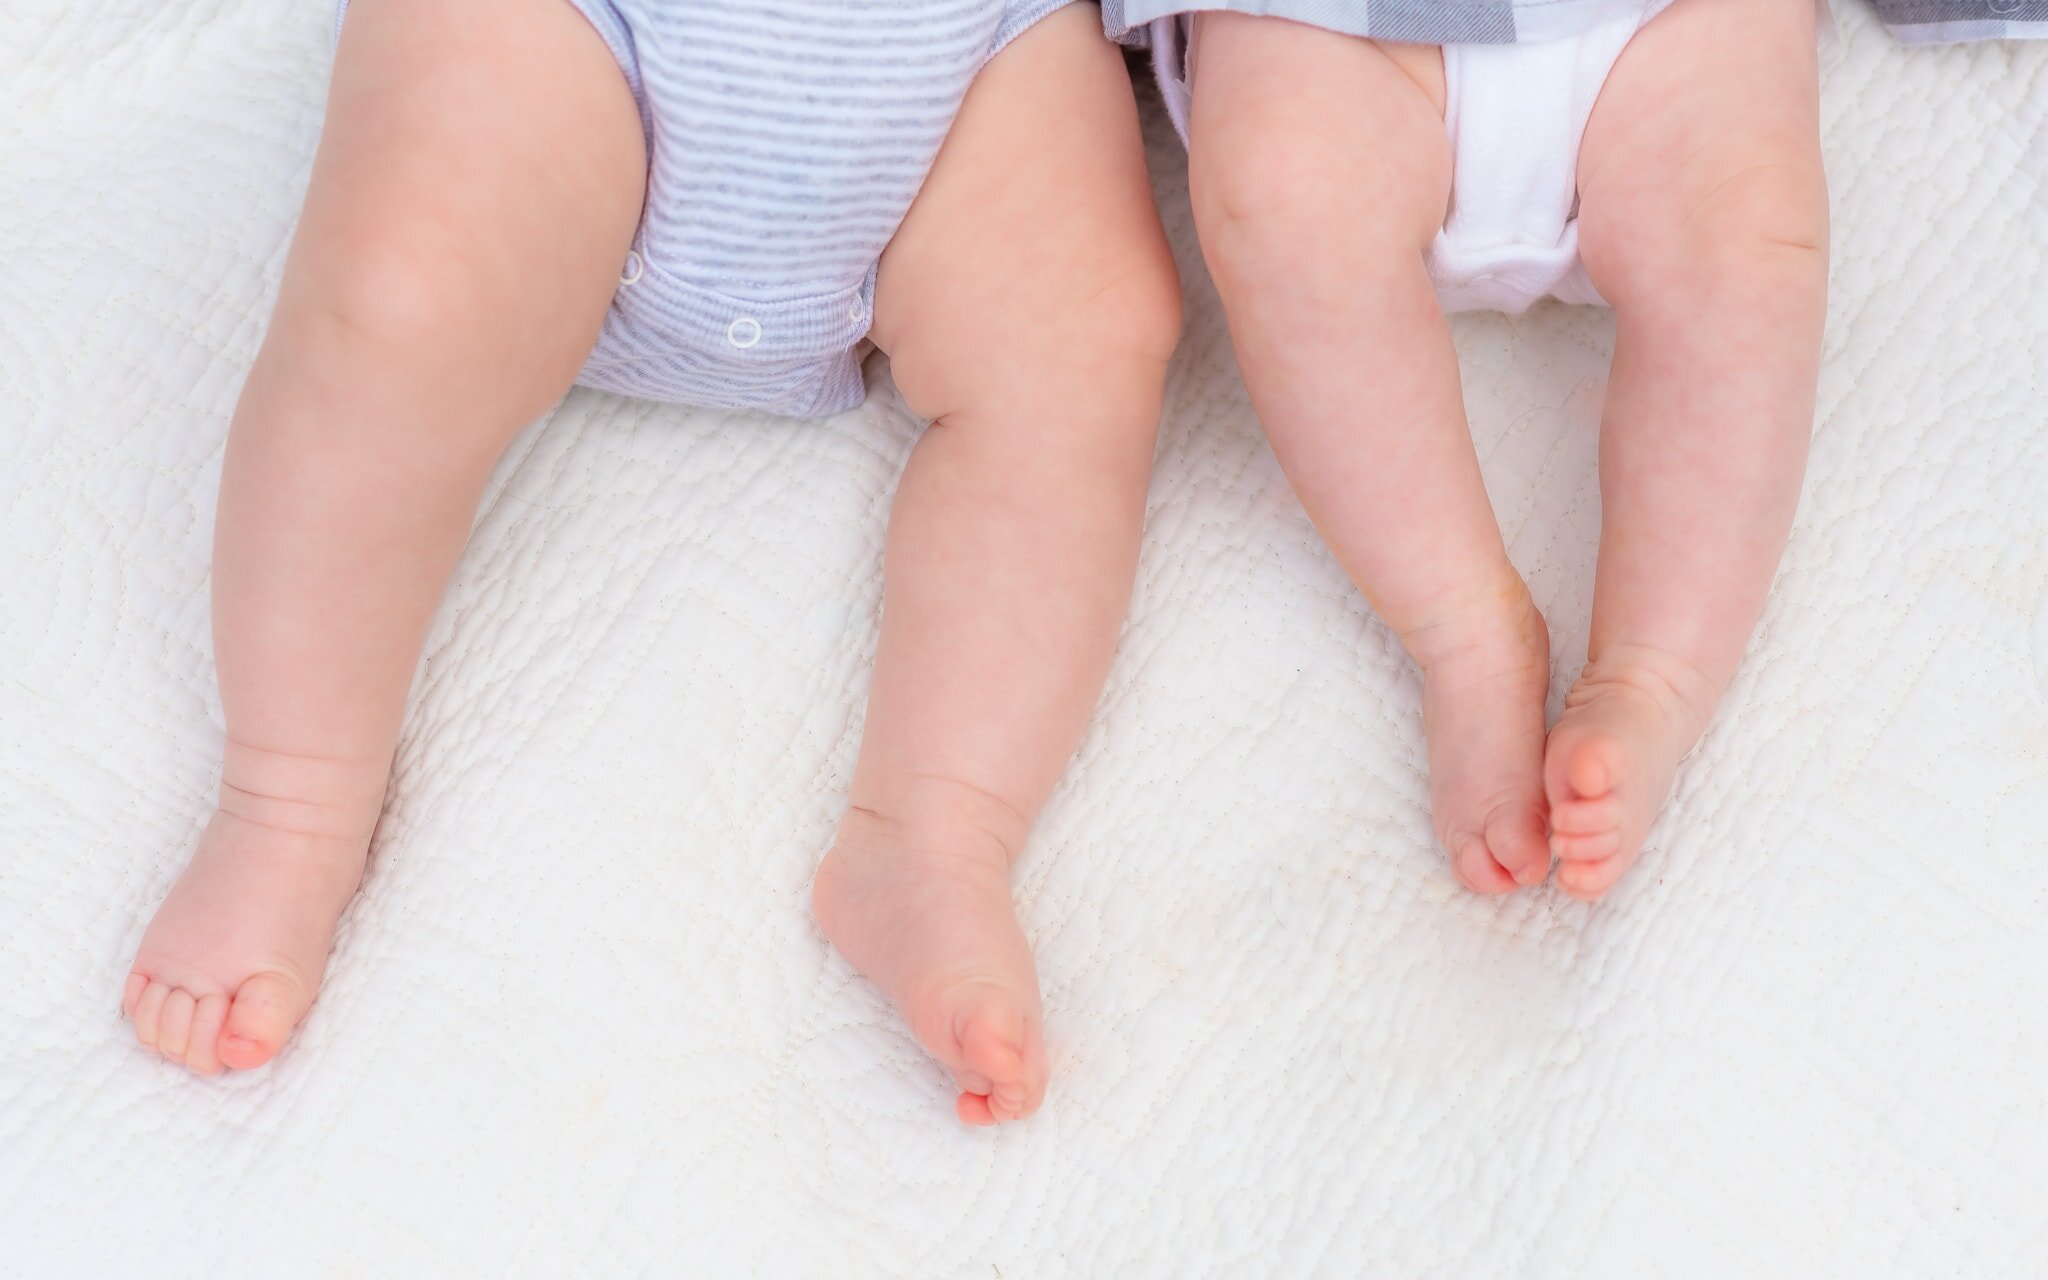 Bethesda Maryland Newborn Photoshoot - close-up of twin babies feet